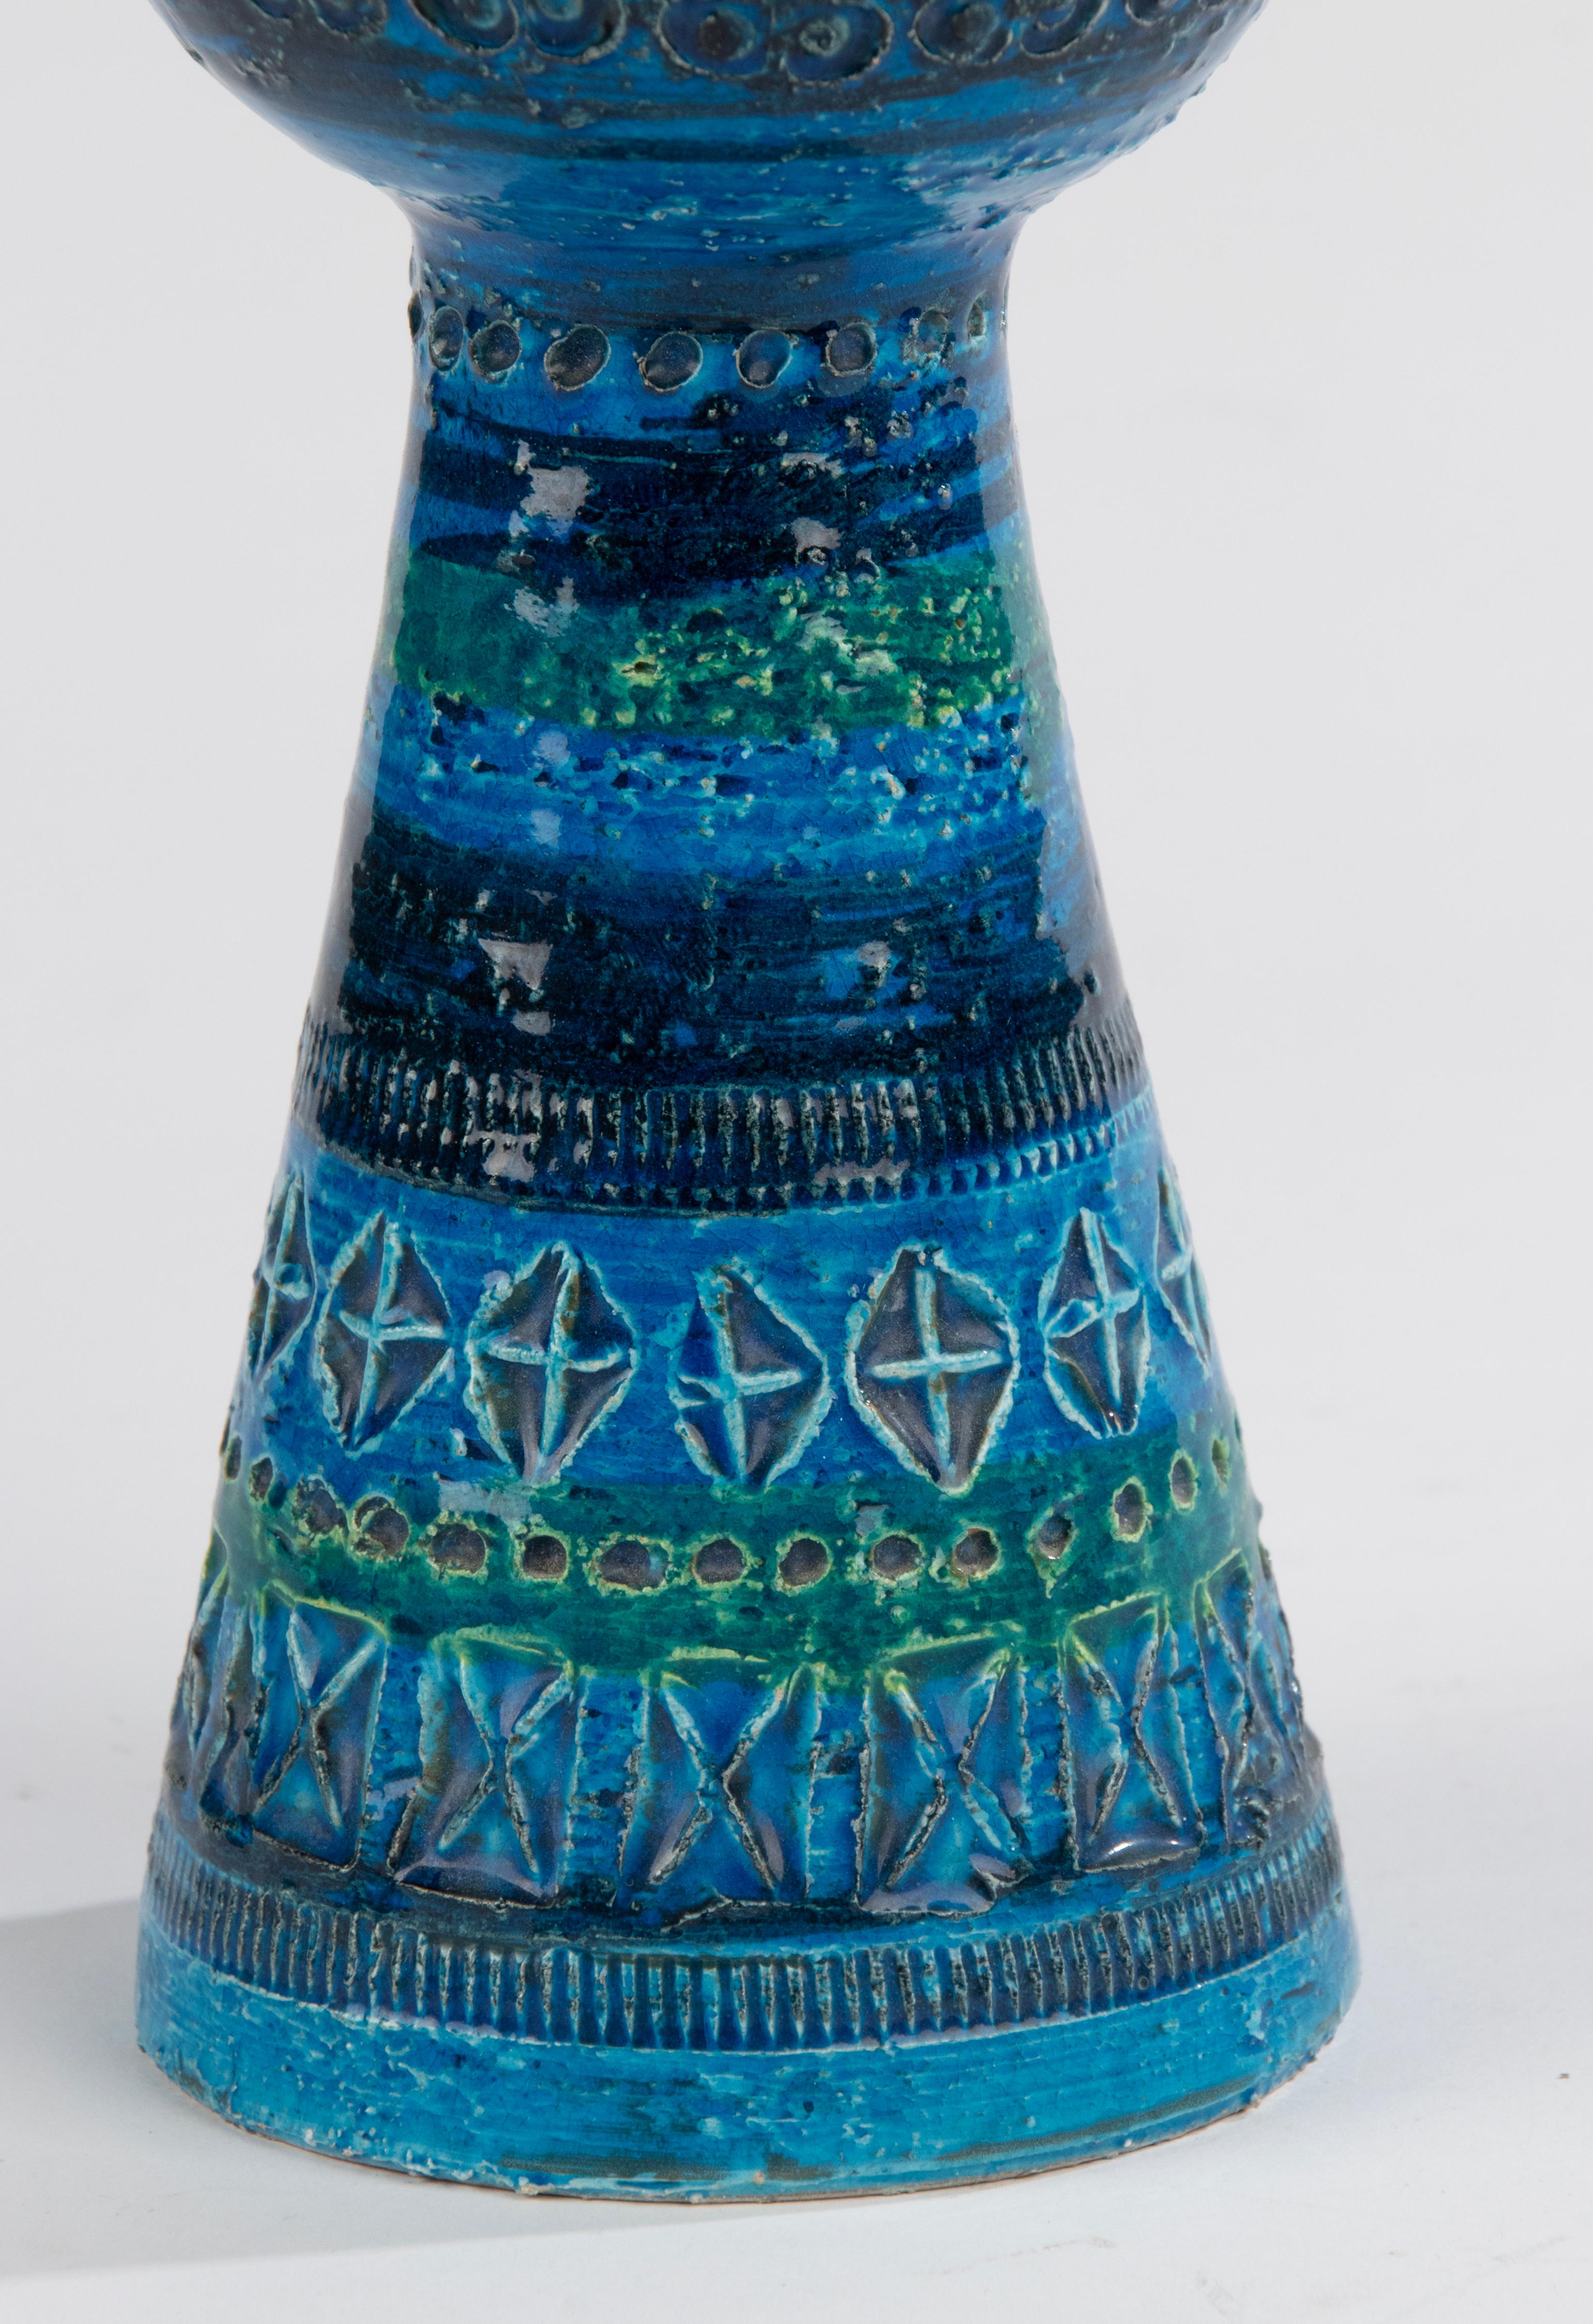 Milieu du XXe siècle  Porte-bougies en céramique moderne du milieu du siècle dernier, attribuée à Bitossi Aldo Londi en vente